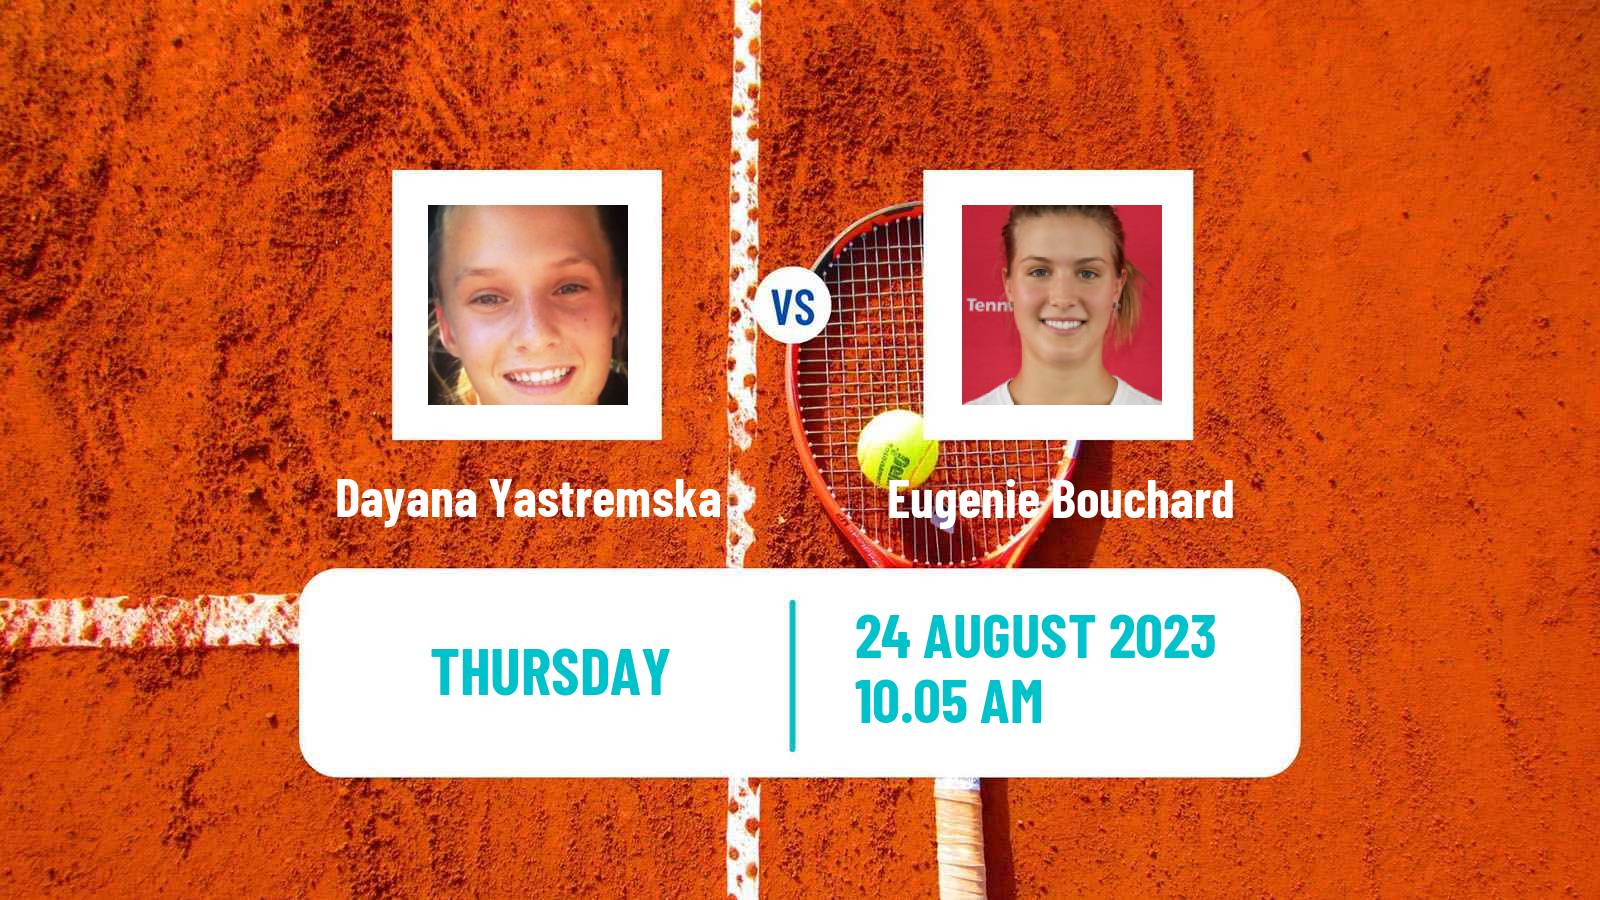 Tennis WTA US Open Dayana Yastremska - Eugenie Bouchard